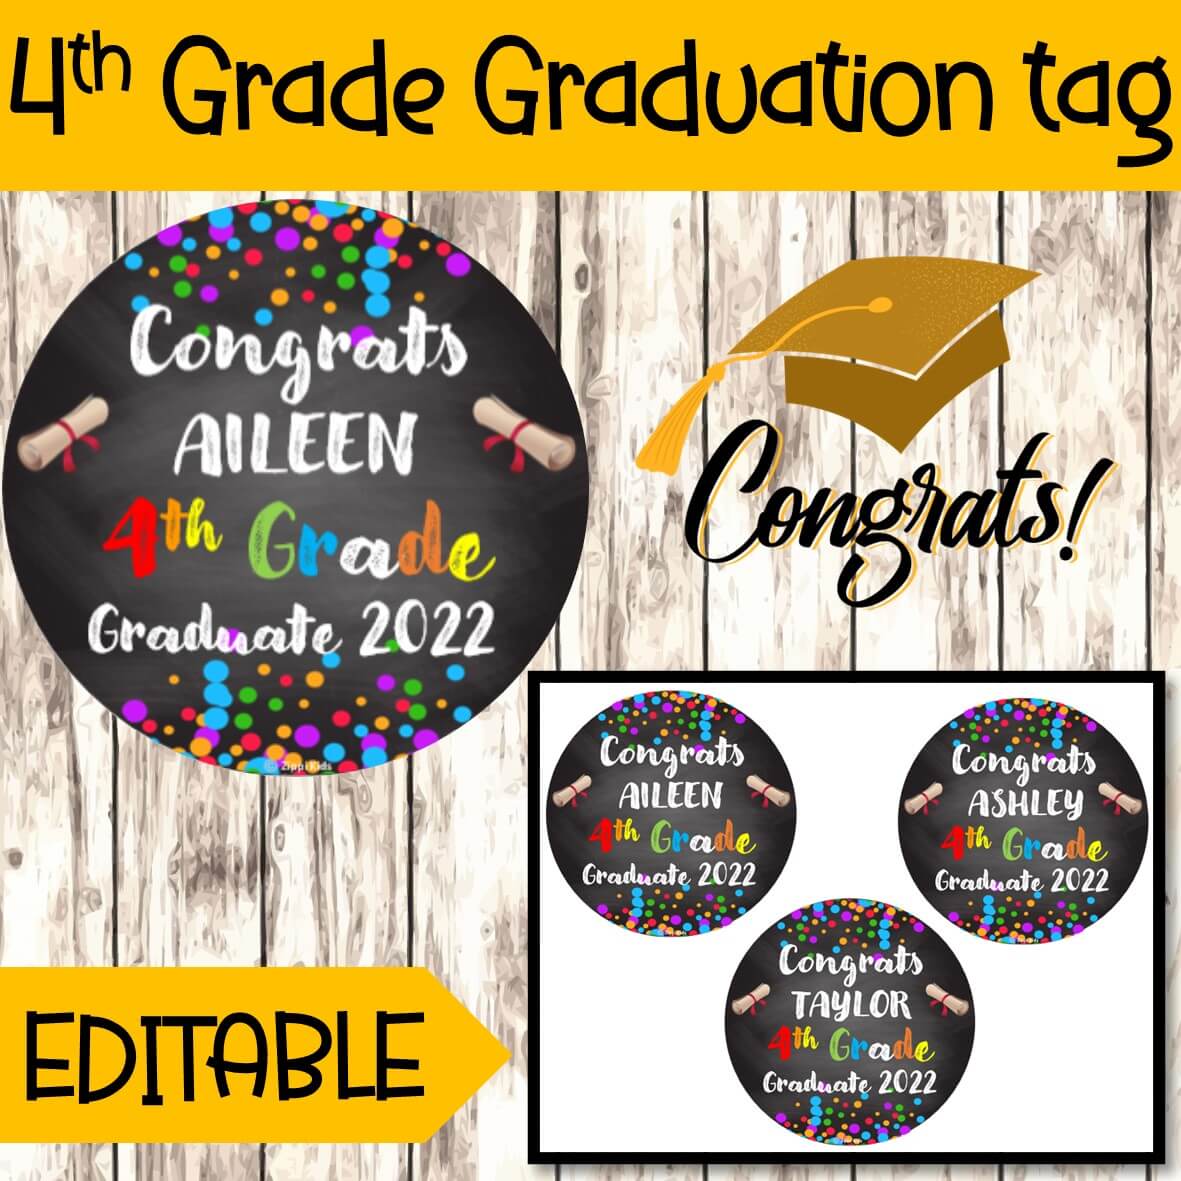 EDITABLE 4th Grade Graduation Gift Tags, Congrats 4th Grade Graduate tags